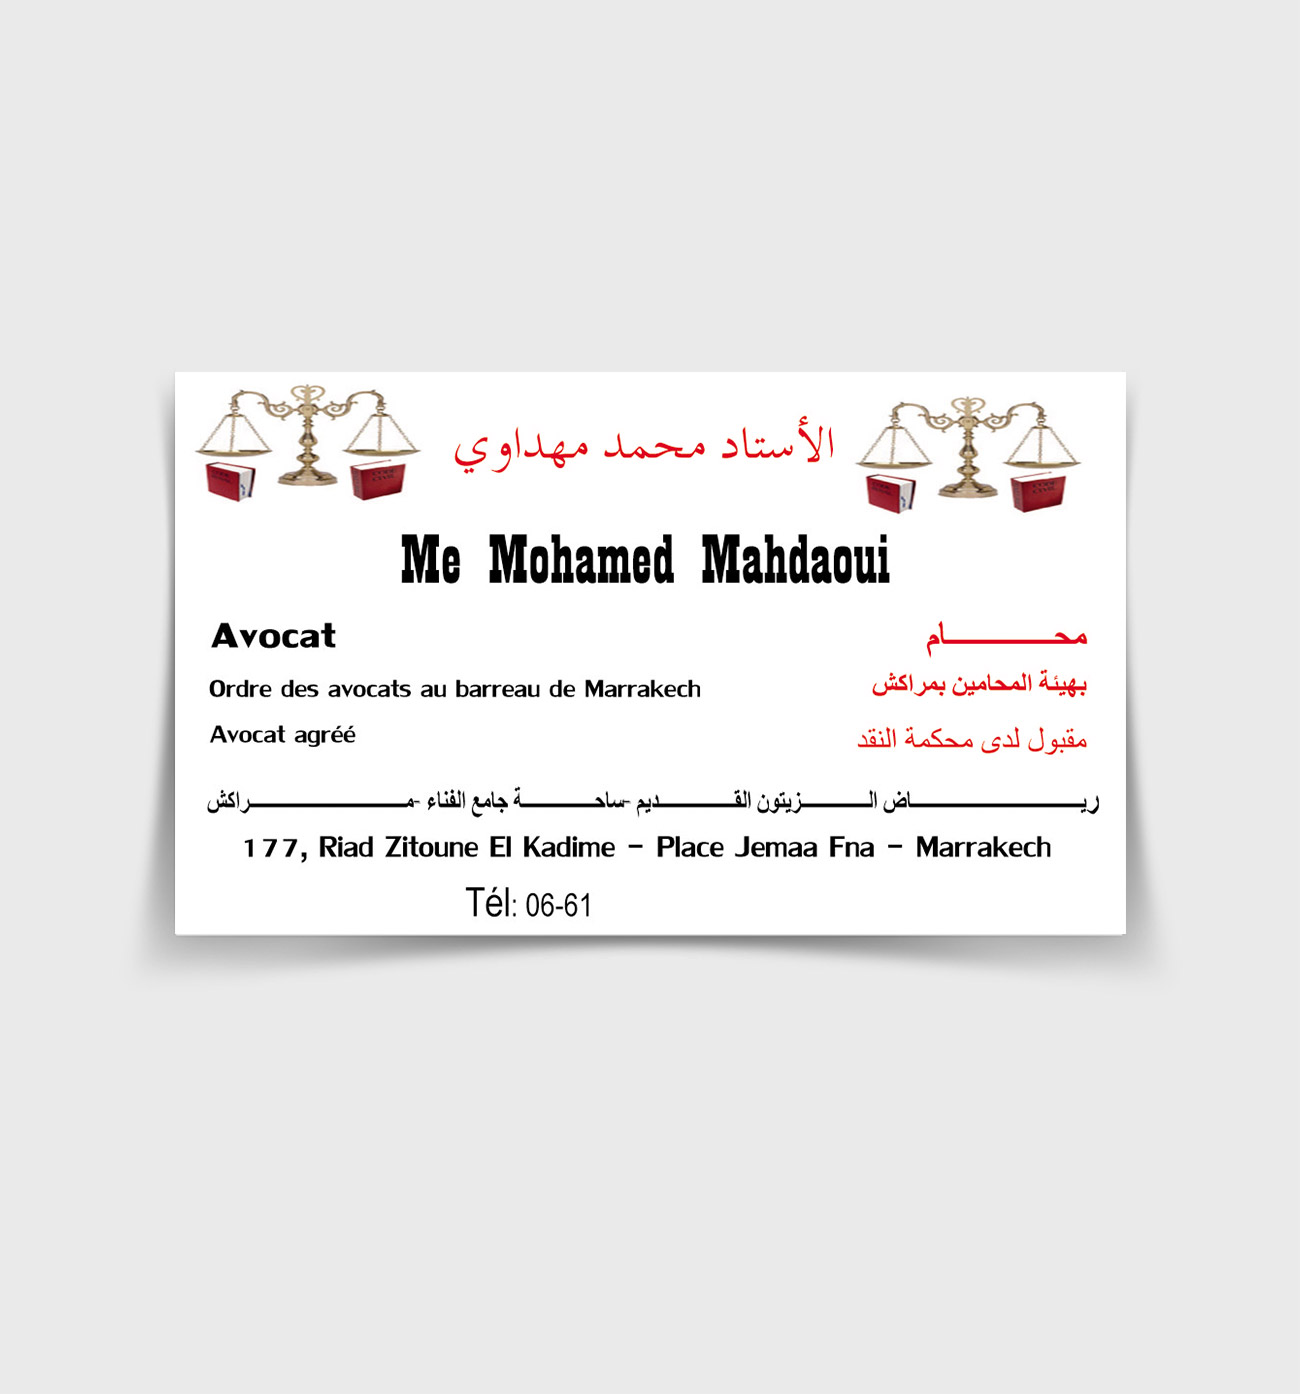 Me Mohammed Mahdaoui Avocat